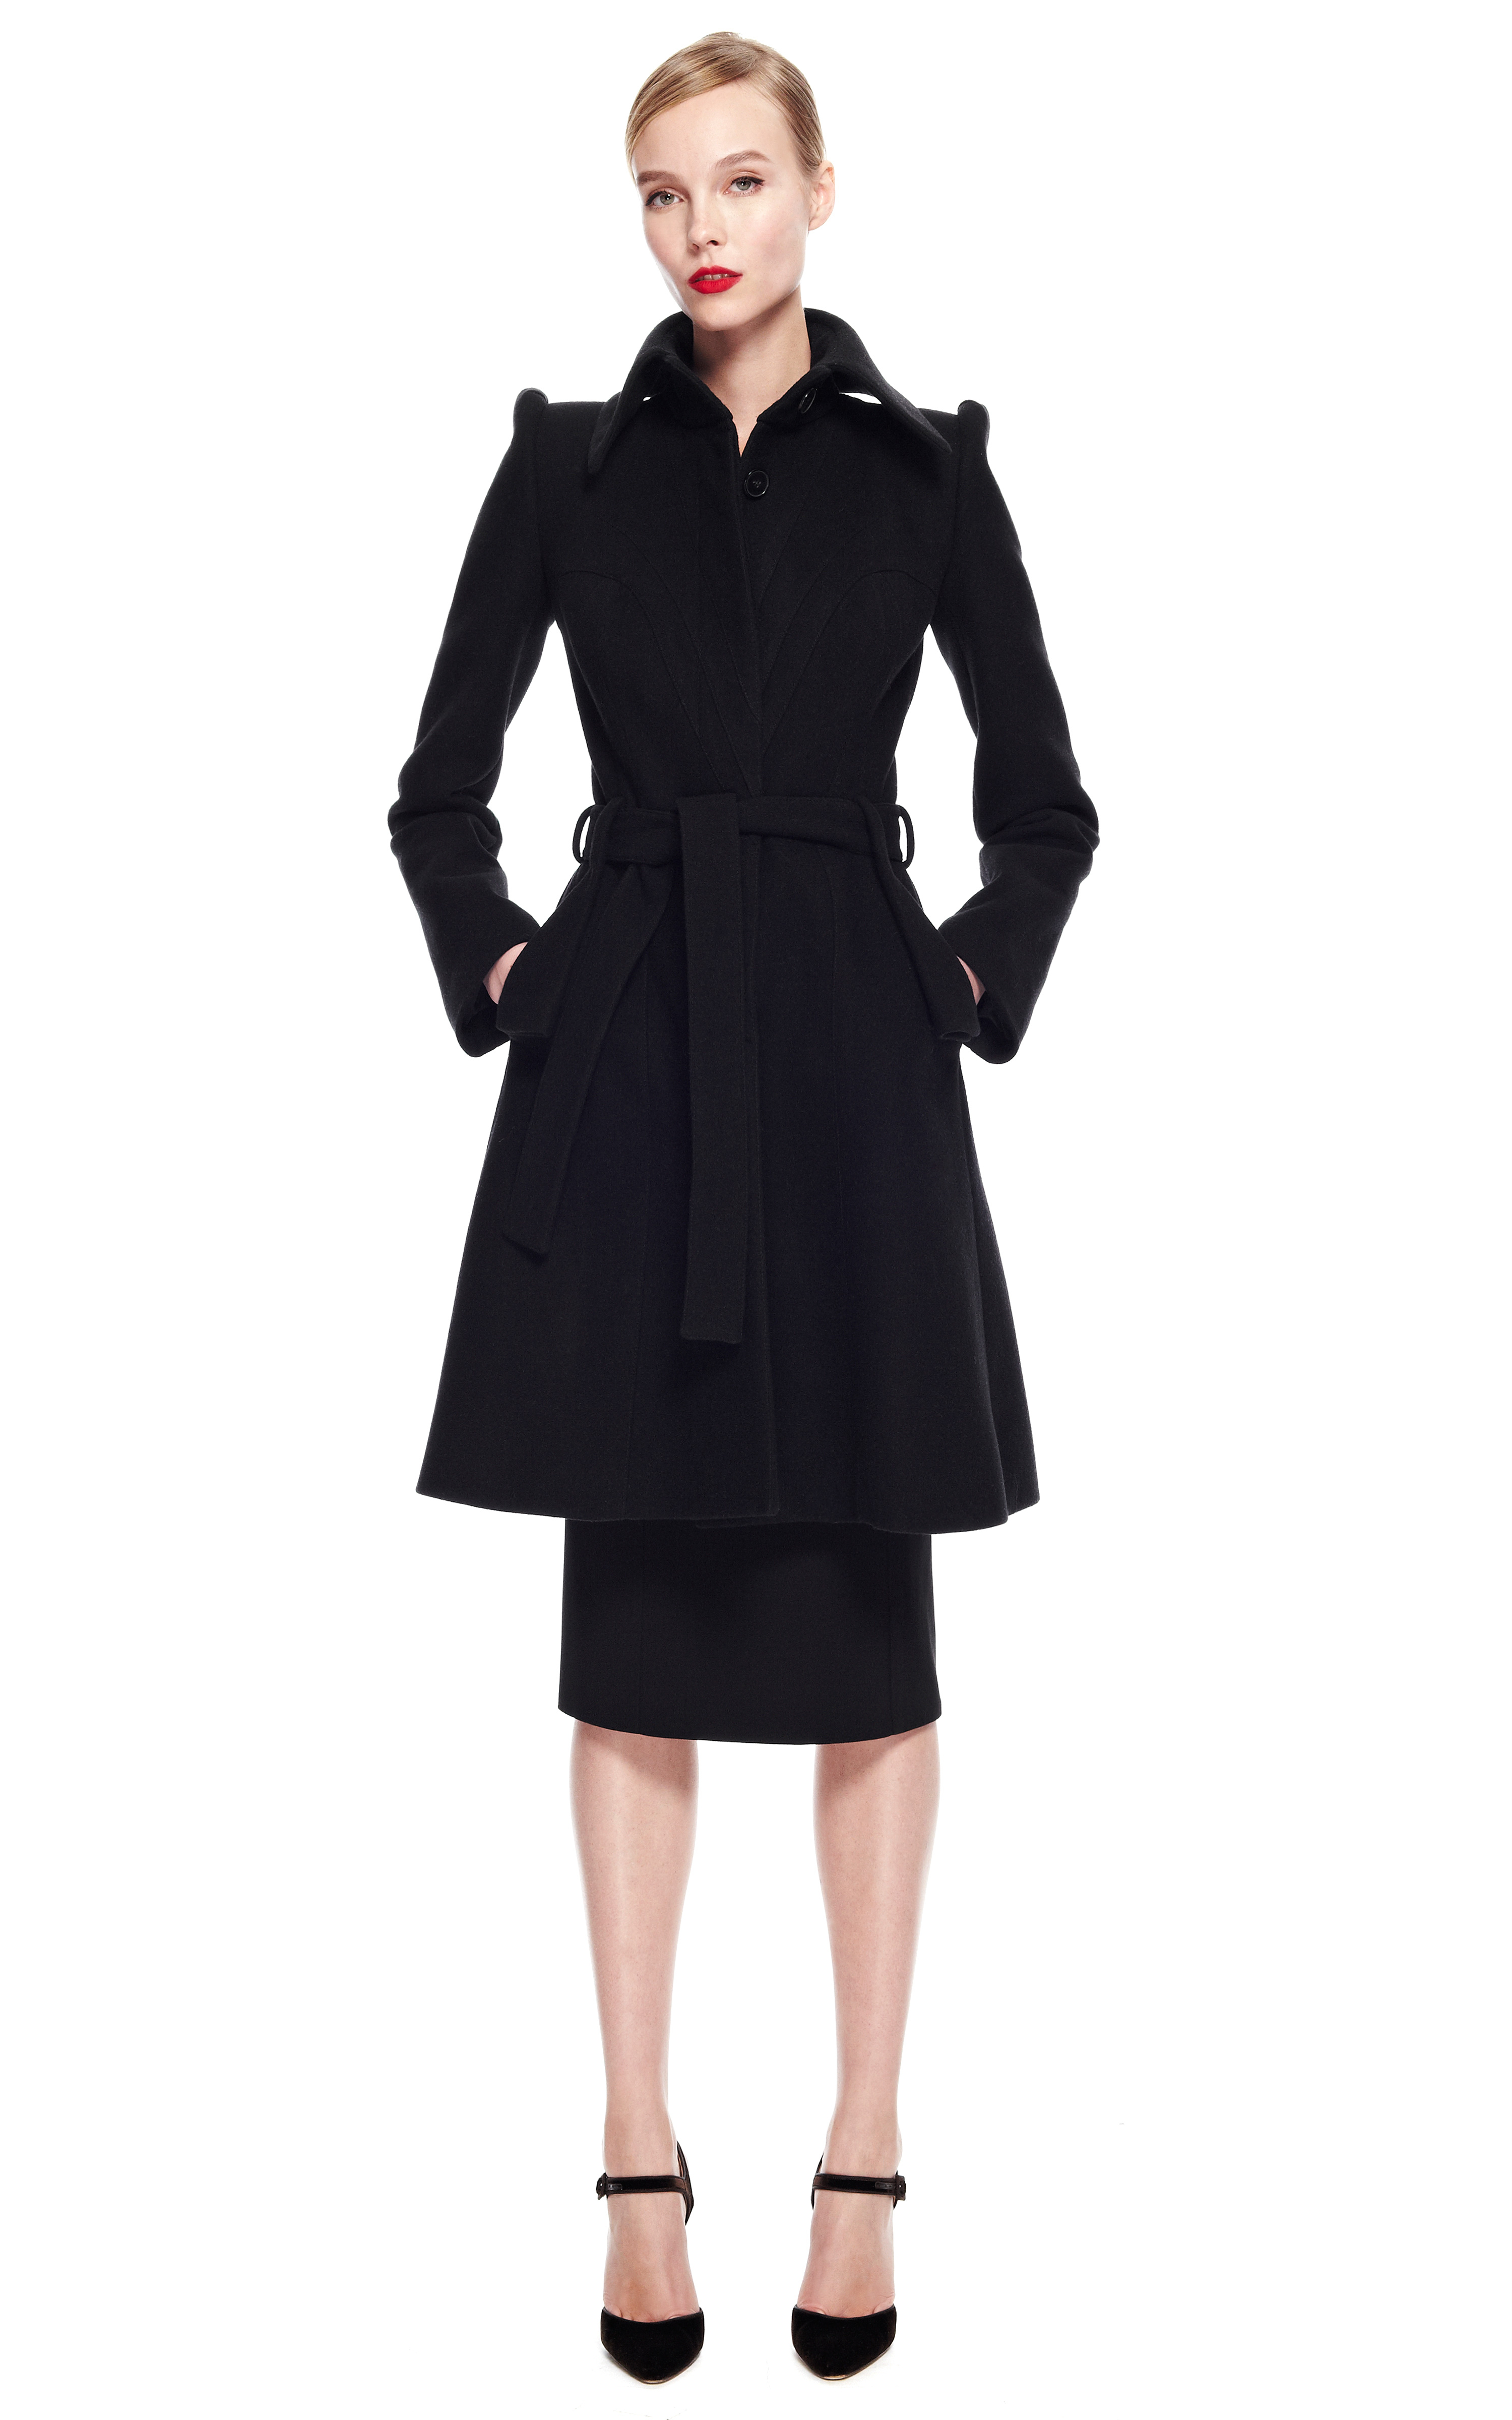 Lyst - Zac Posen Cashmere Wool Coating Dress Coat in Black